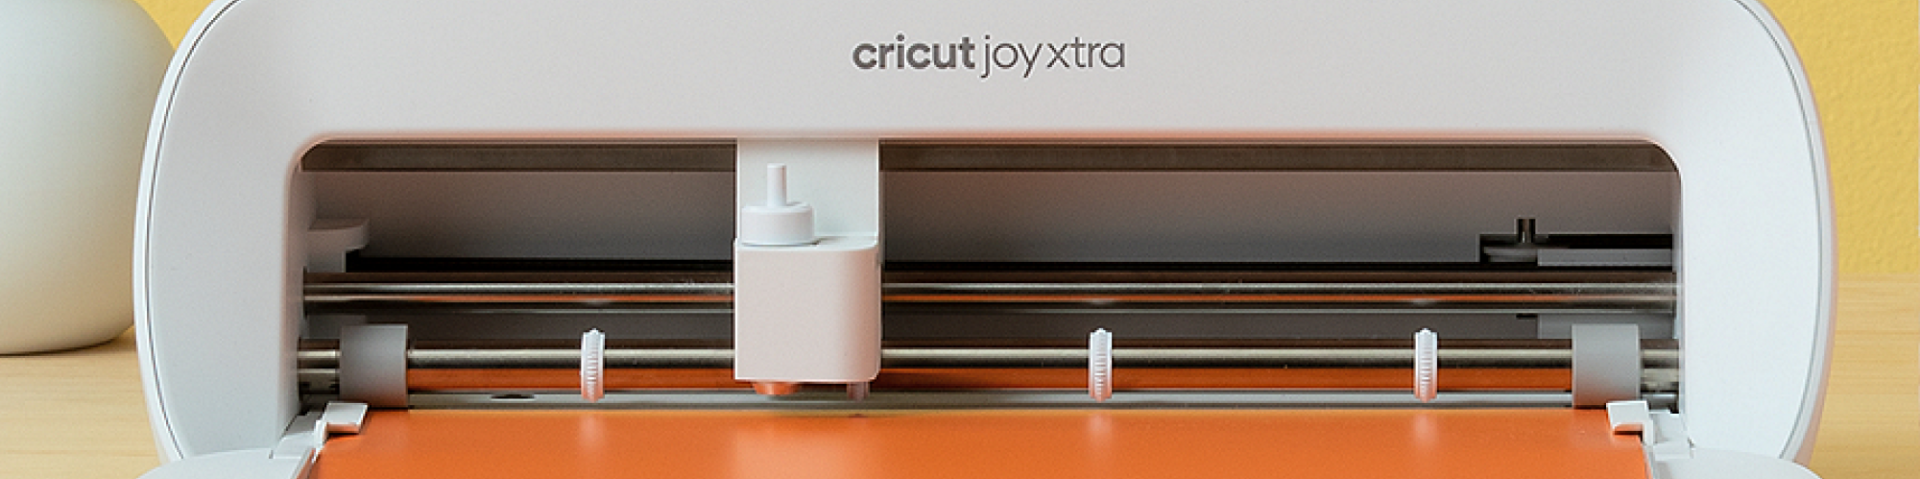 Cricut Cutting Machine Comparison // Joy, Joy Xtra, Explore 3